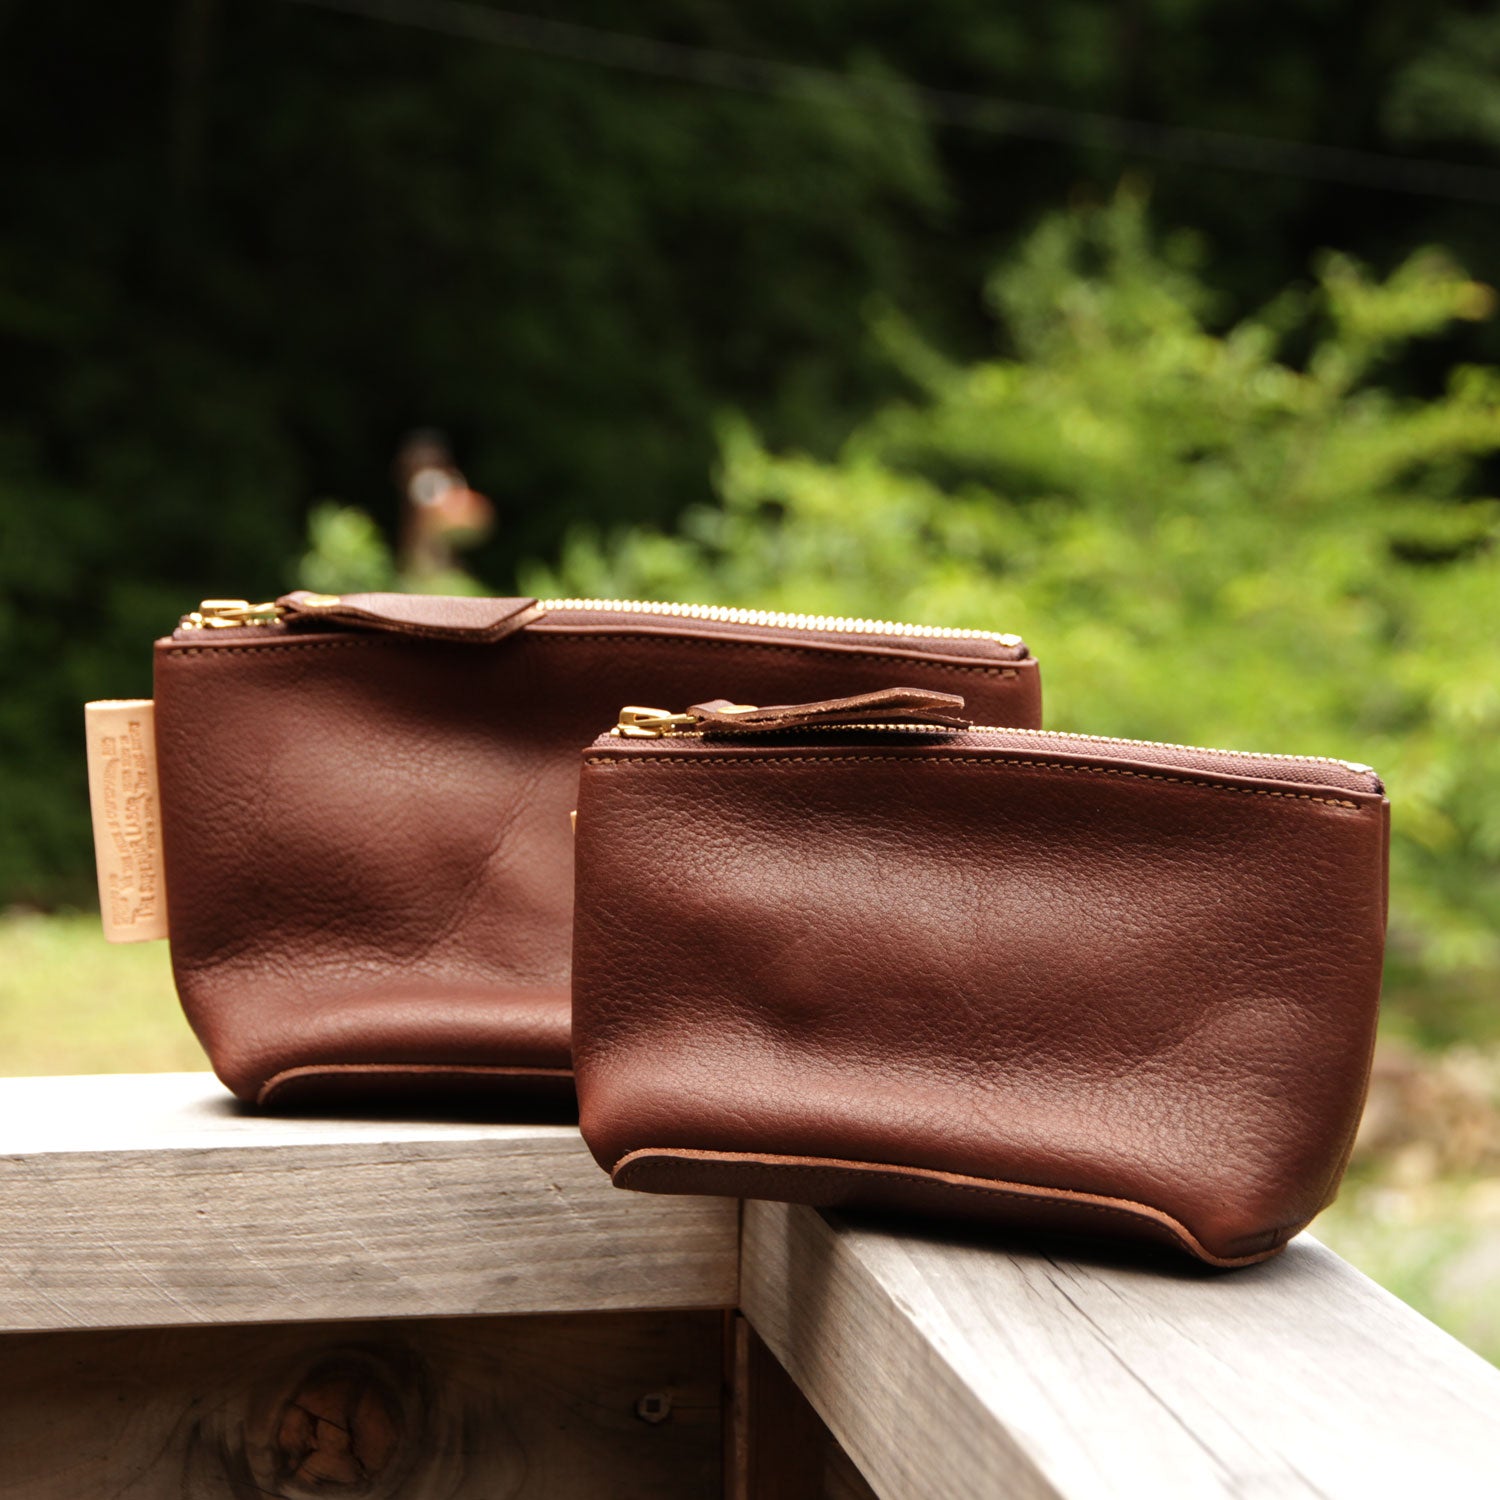 BG023 leather pouch L